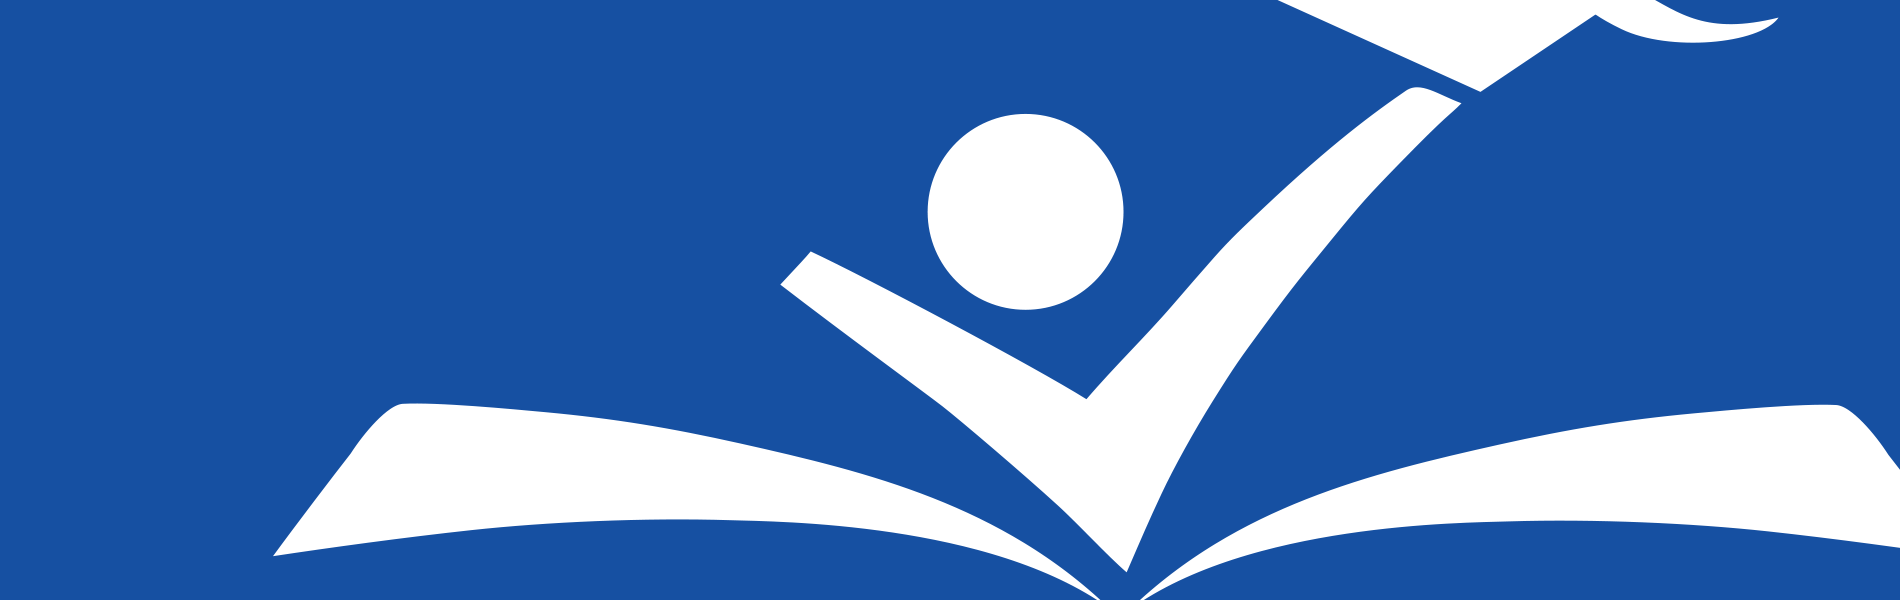 PGCPS Logo Blue